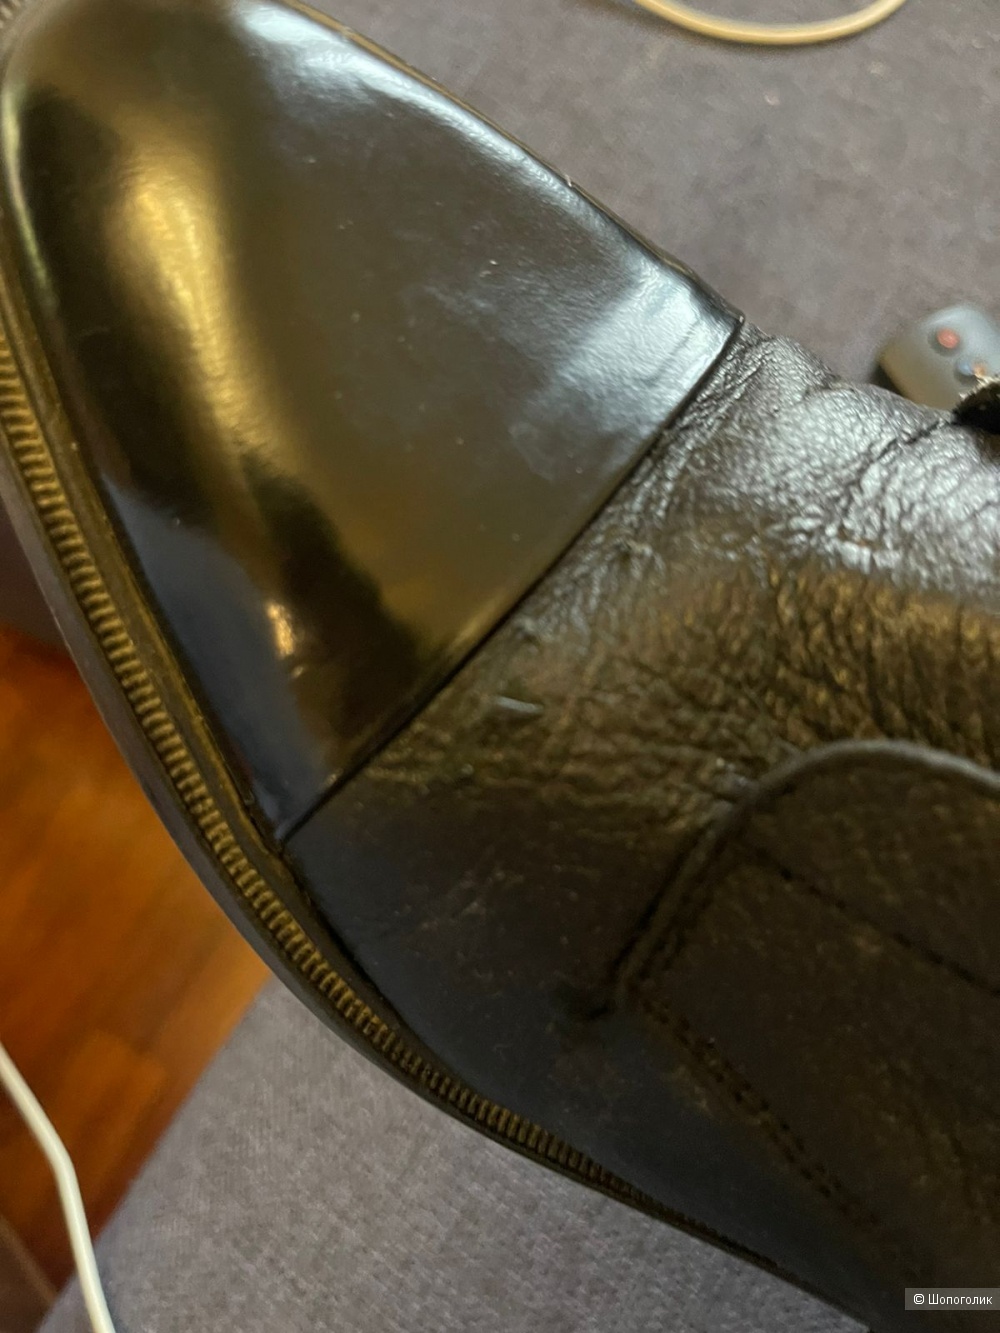 Ботинки Massimo Dutti 39 размер